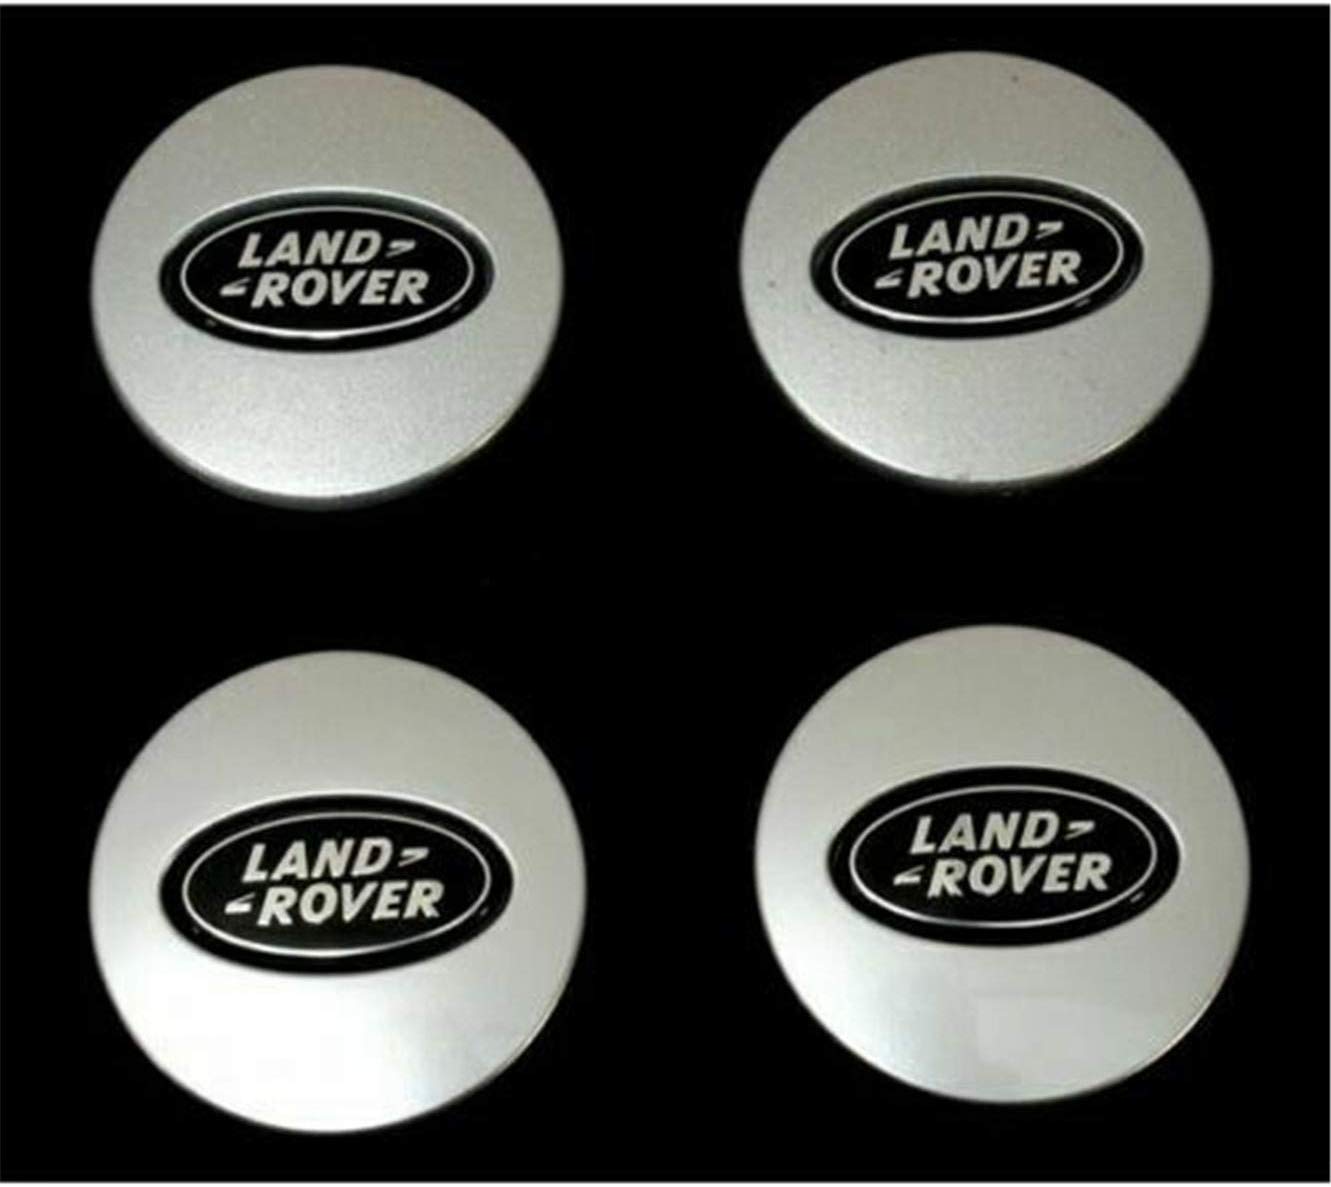 4 tapallantas de Land Rover gris metálico de 63mm